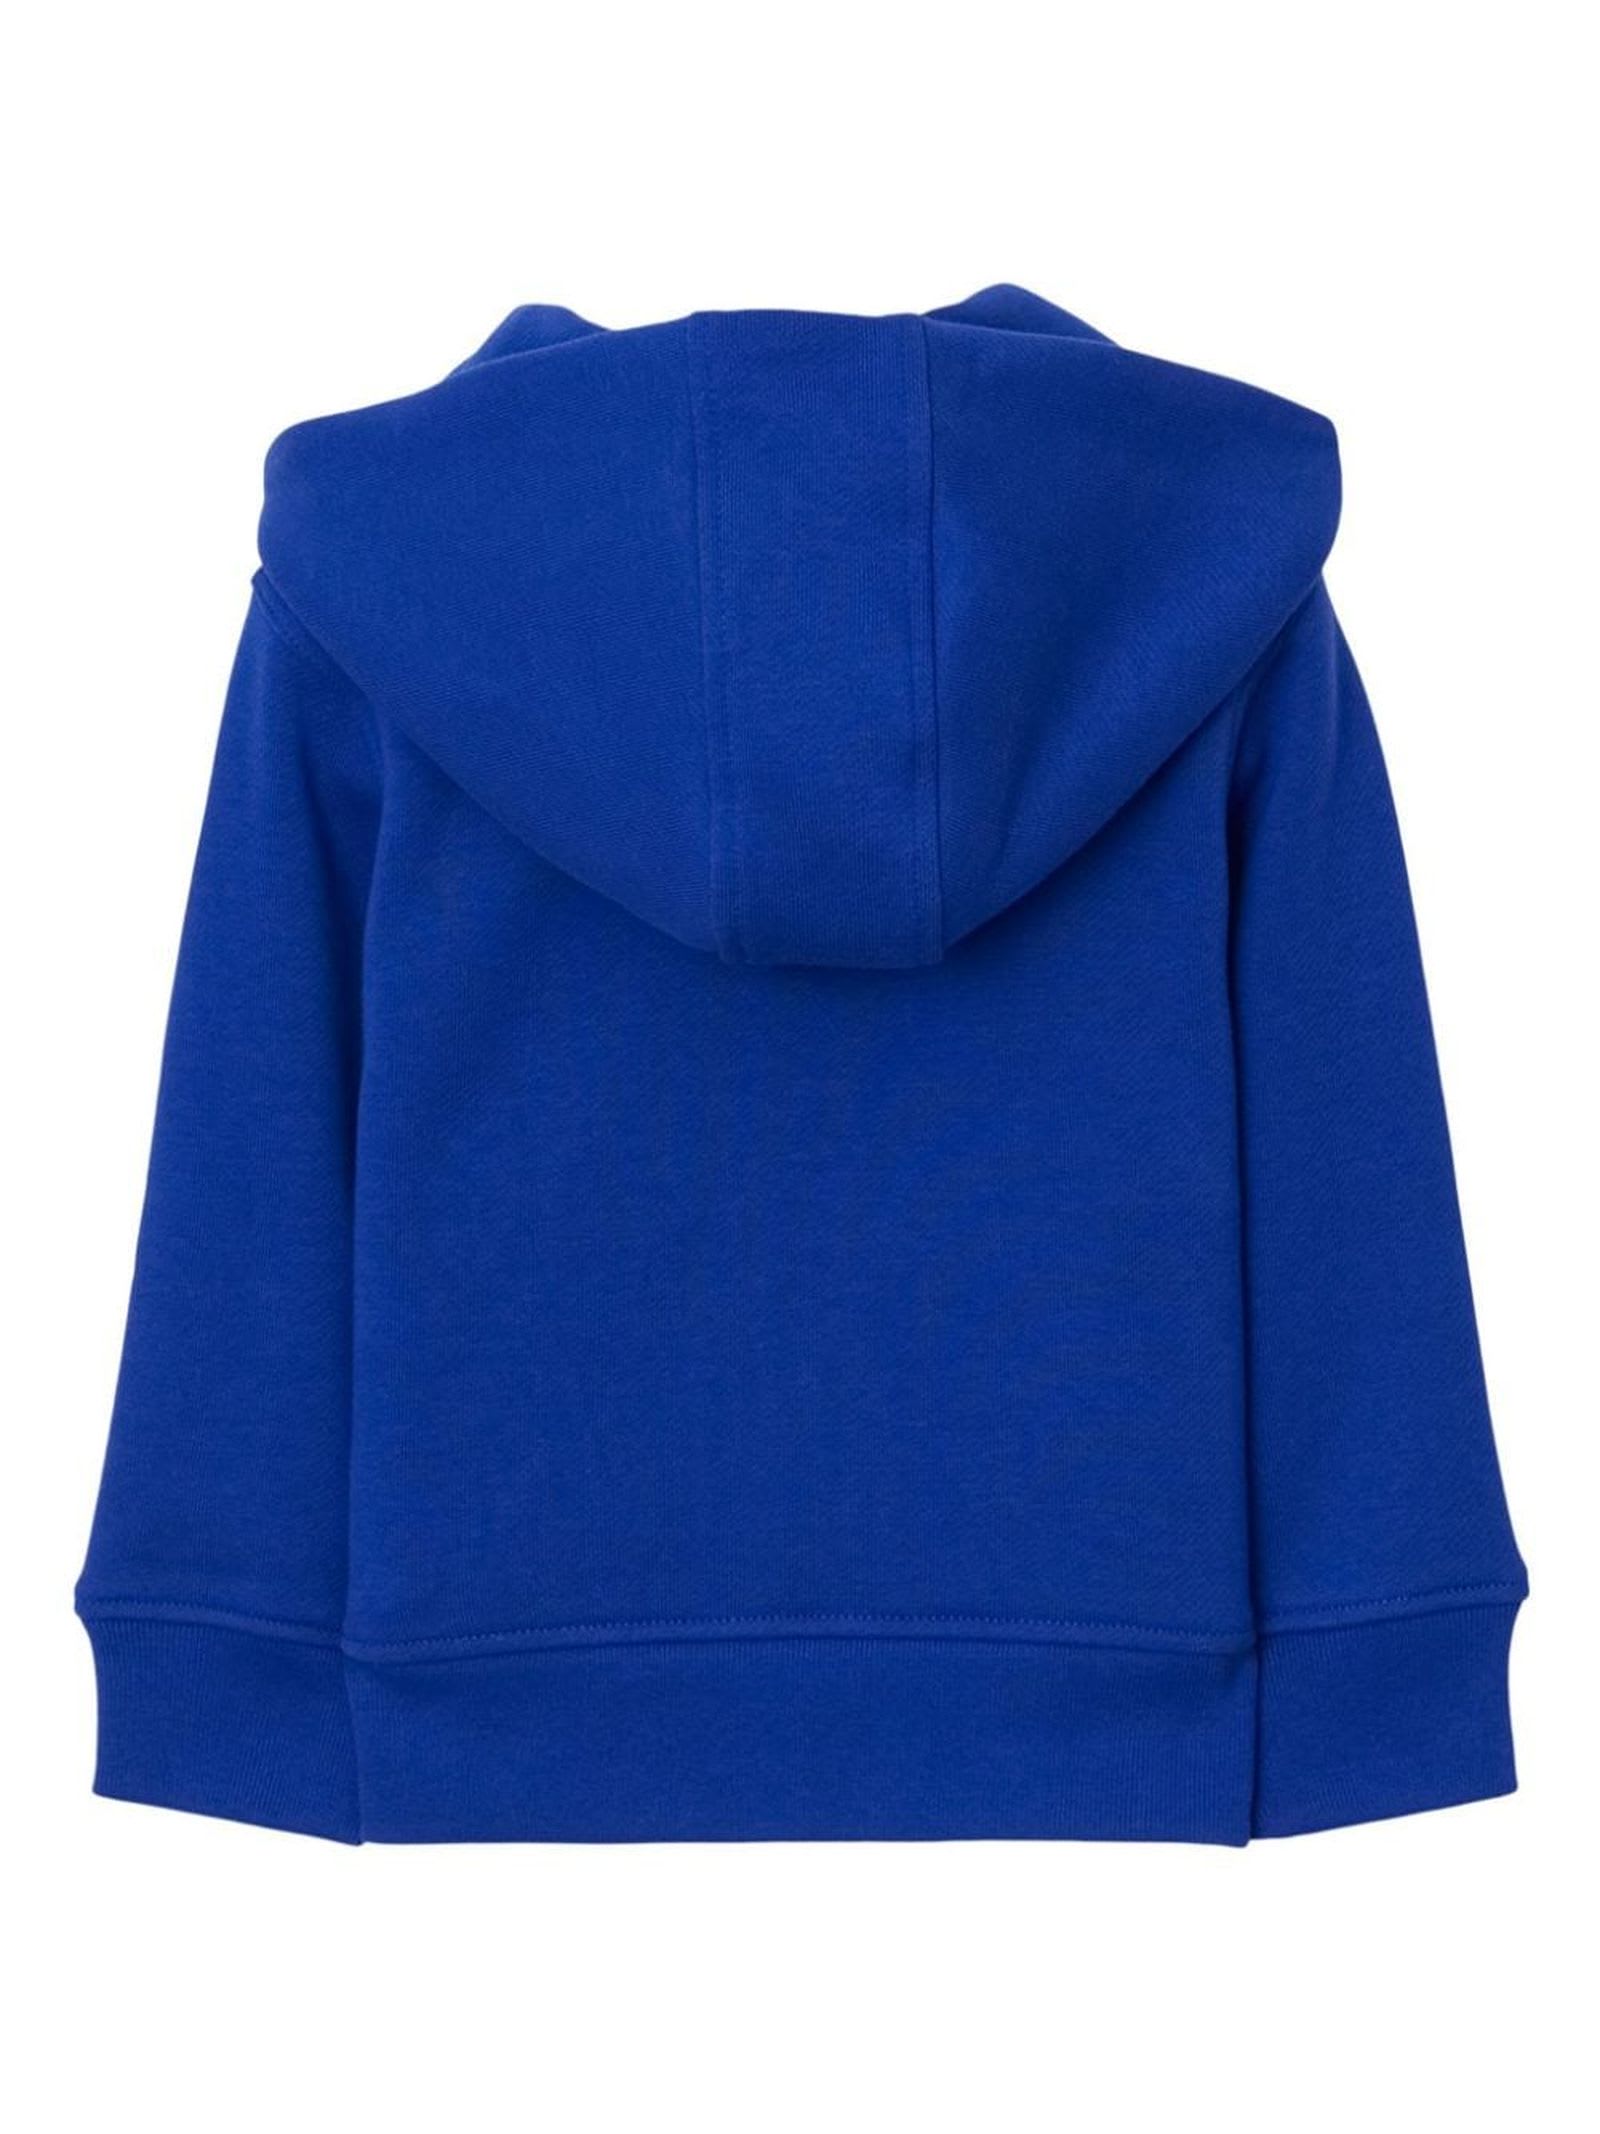 Shop Burberry Kids Sweaters Blue